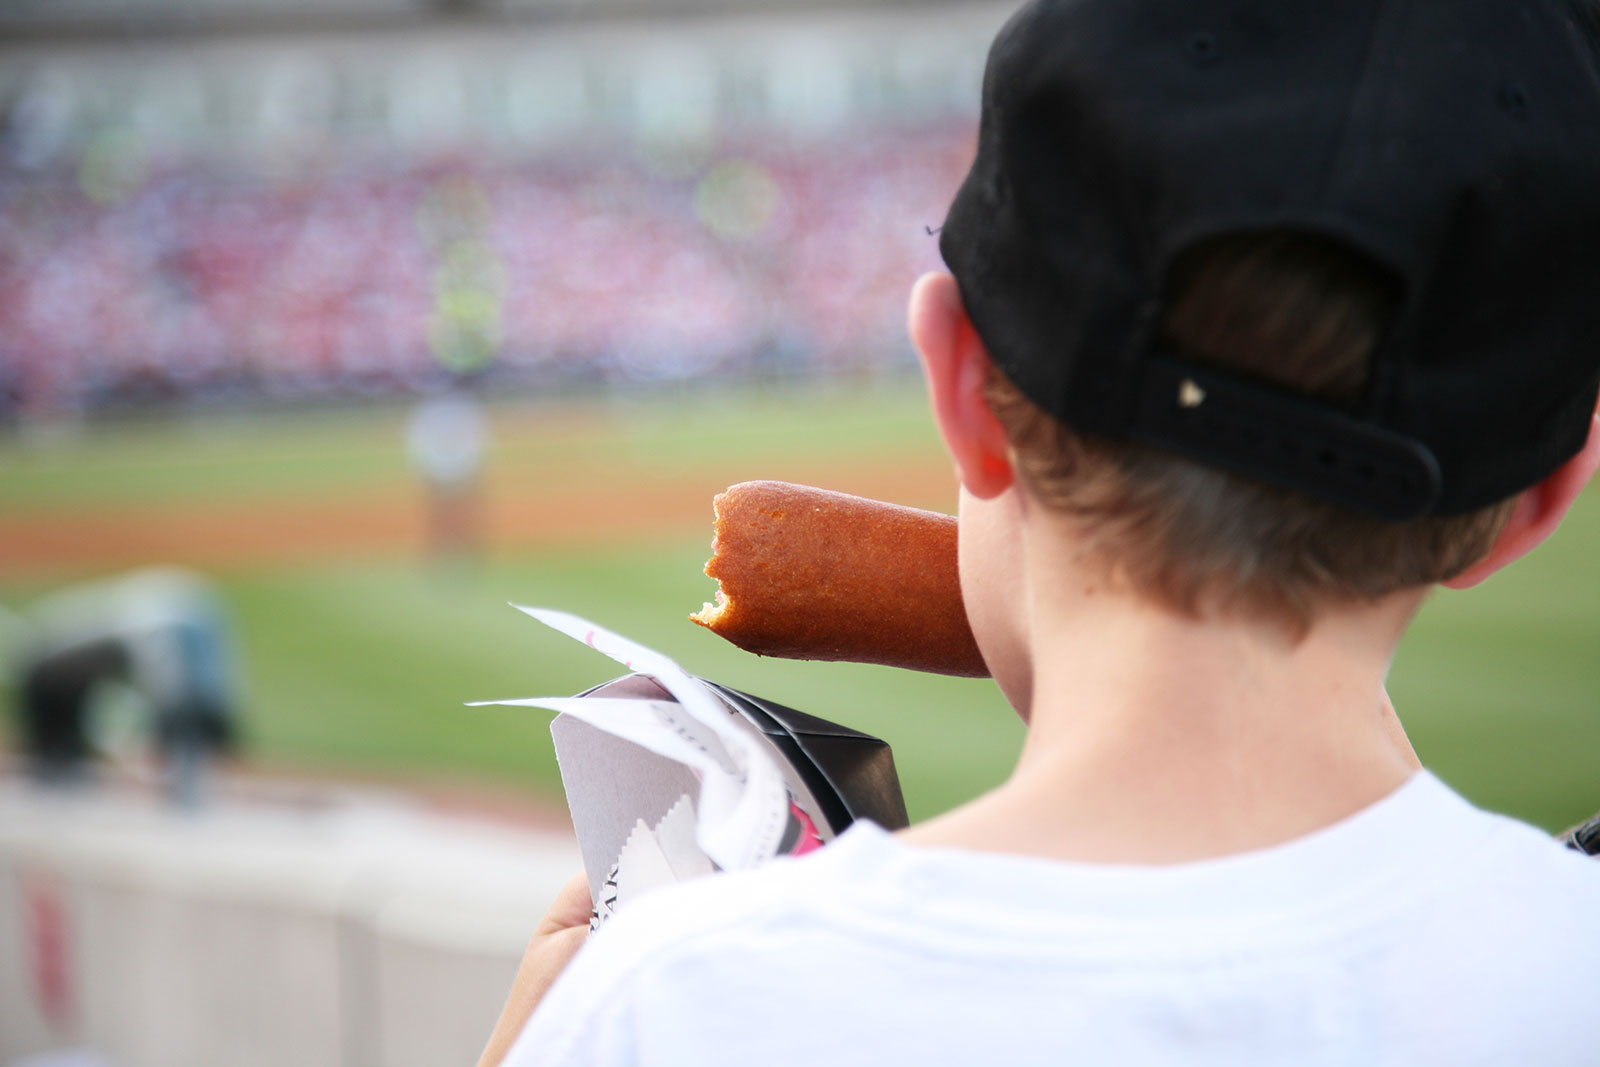 Child eating a corn dog at a baseball game